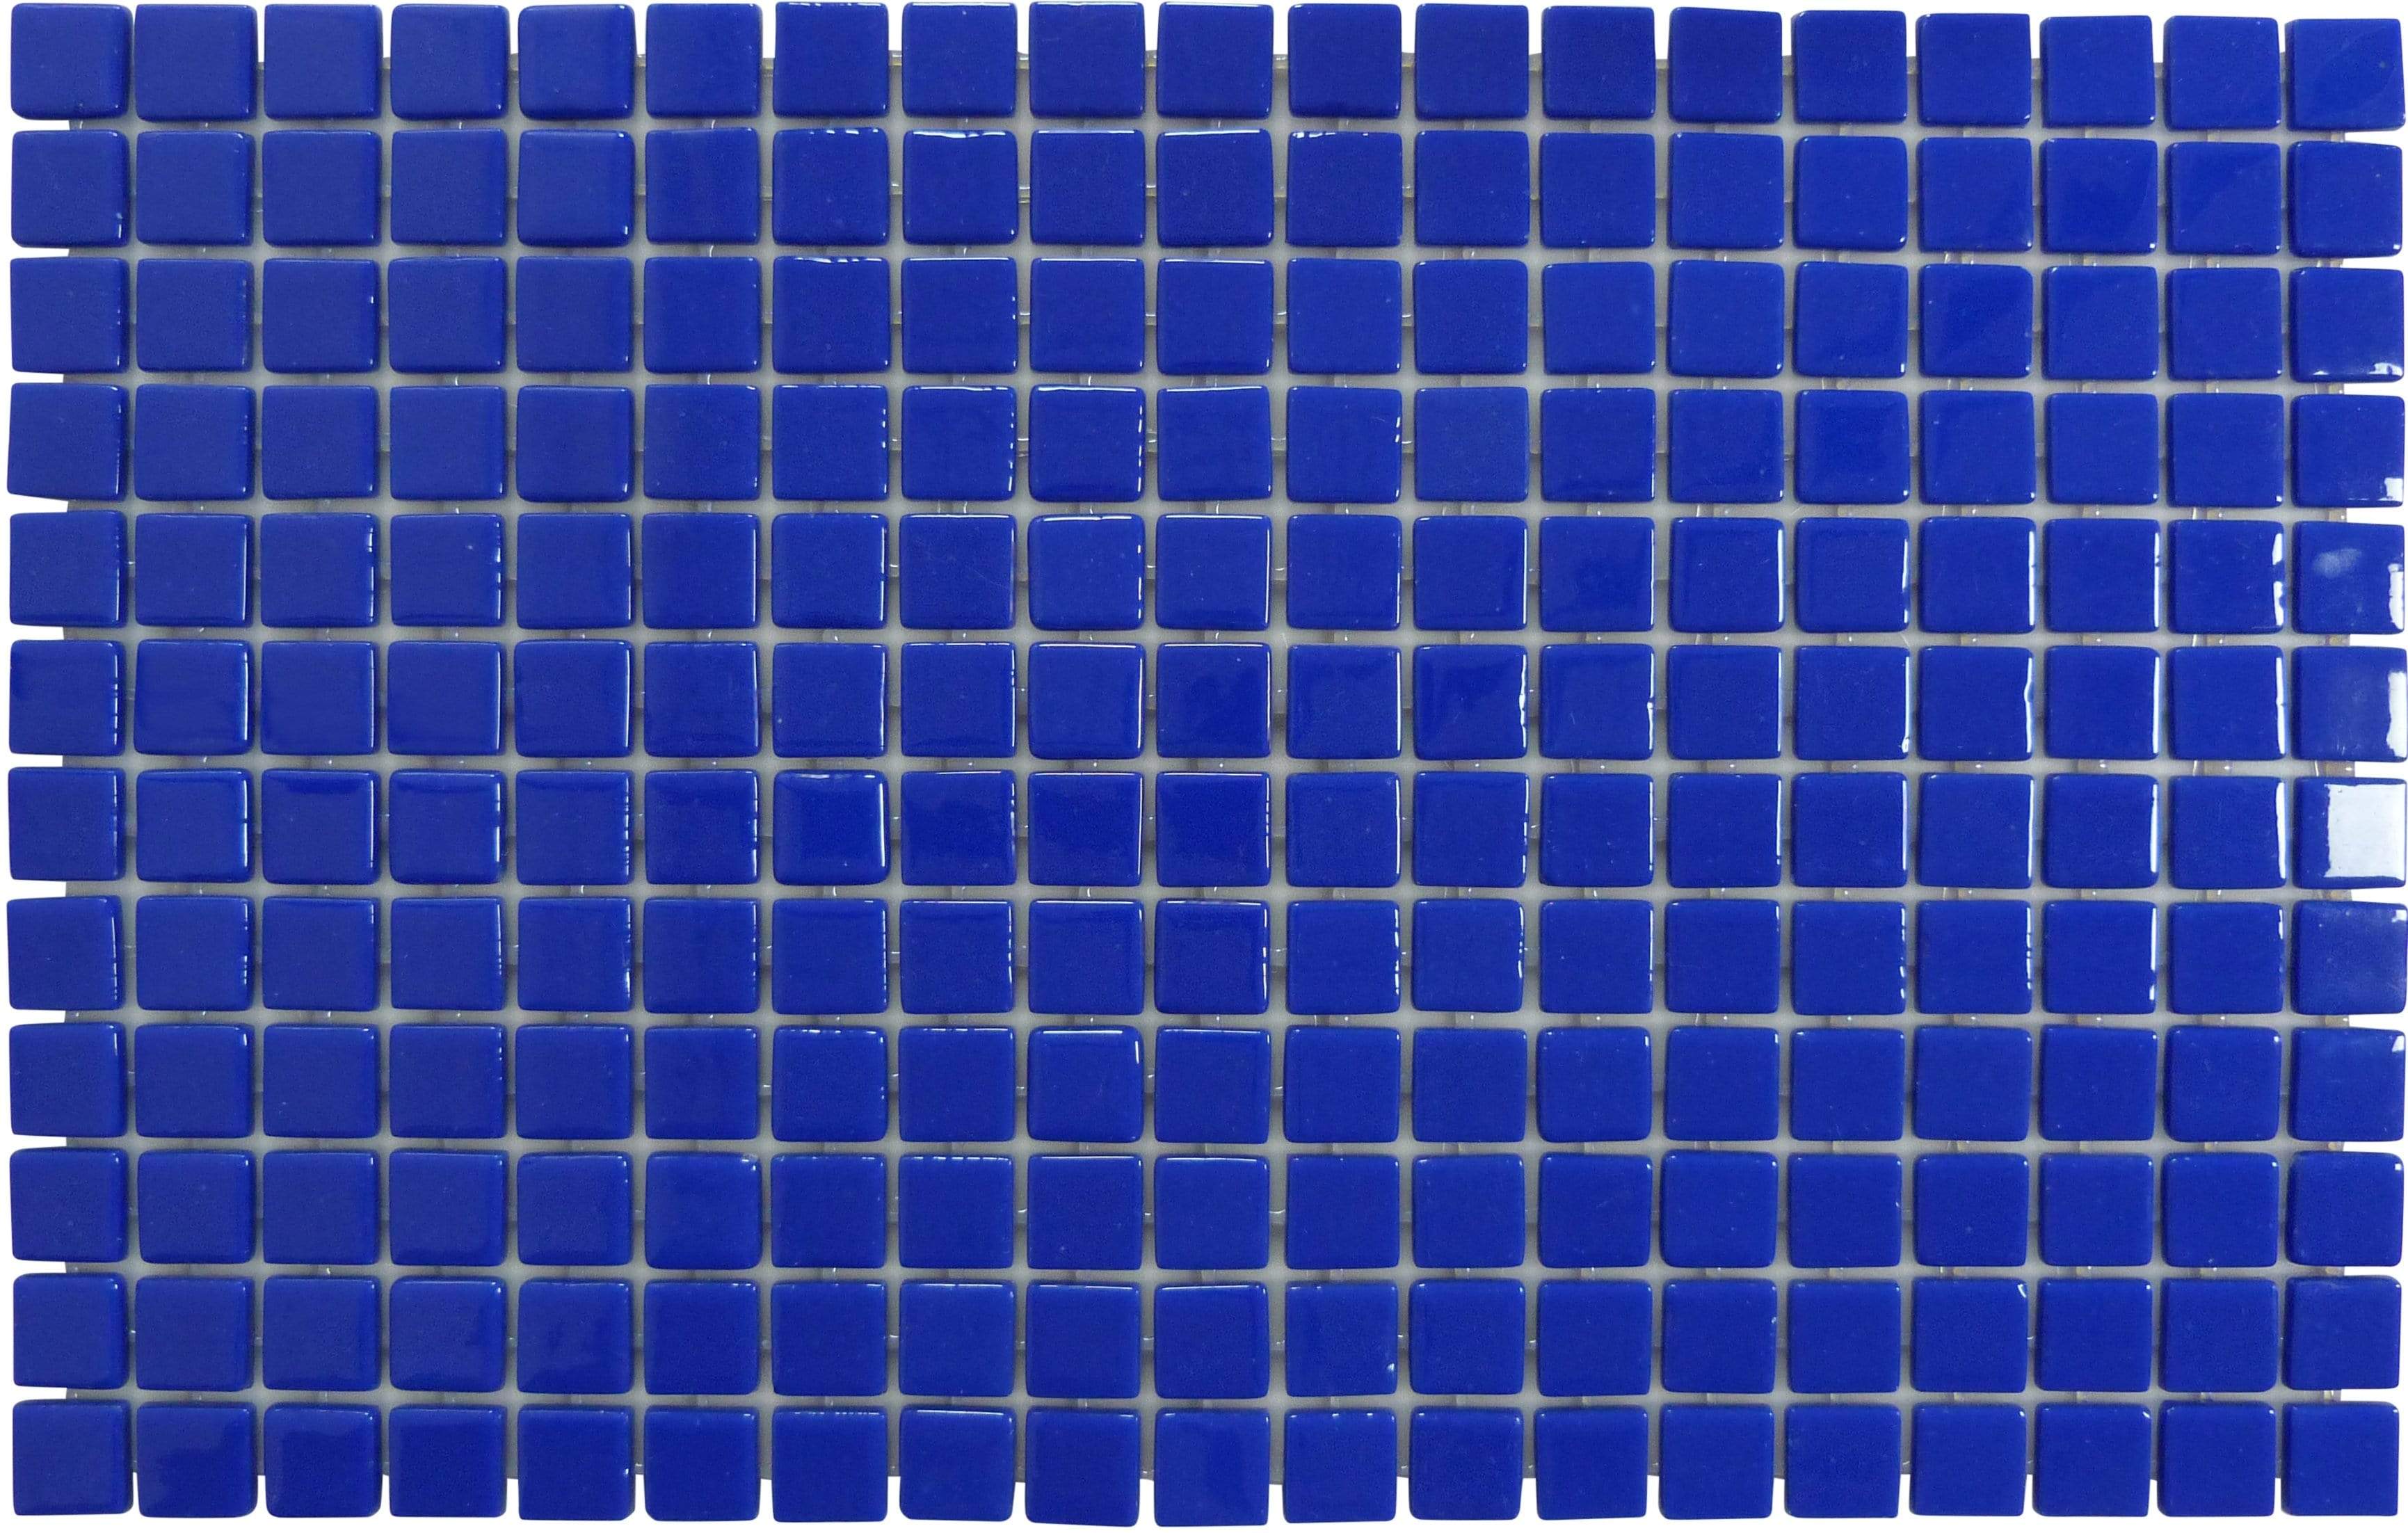 Iridescent Cobalt Blue – National Pool Supply Distributors